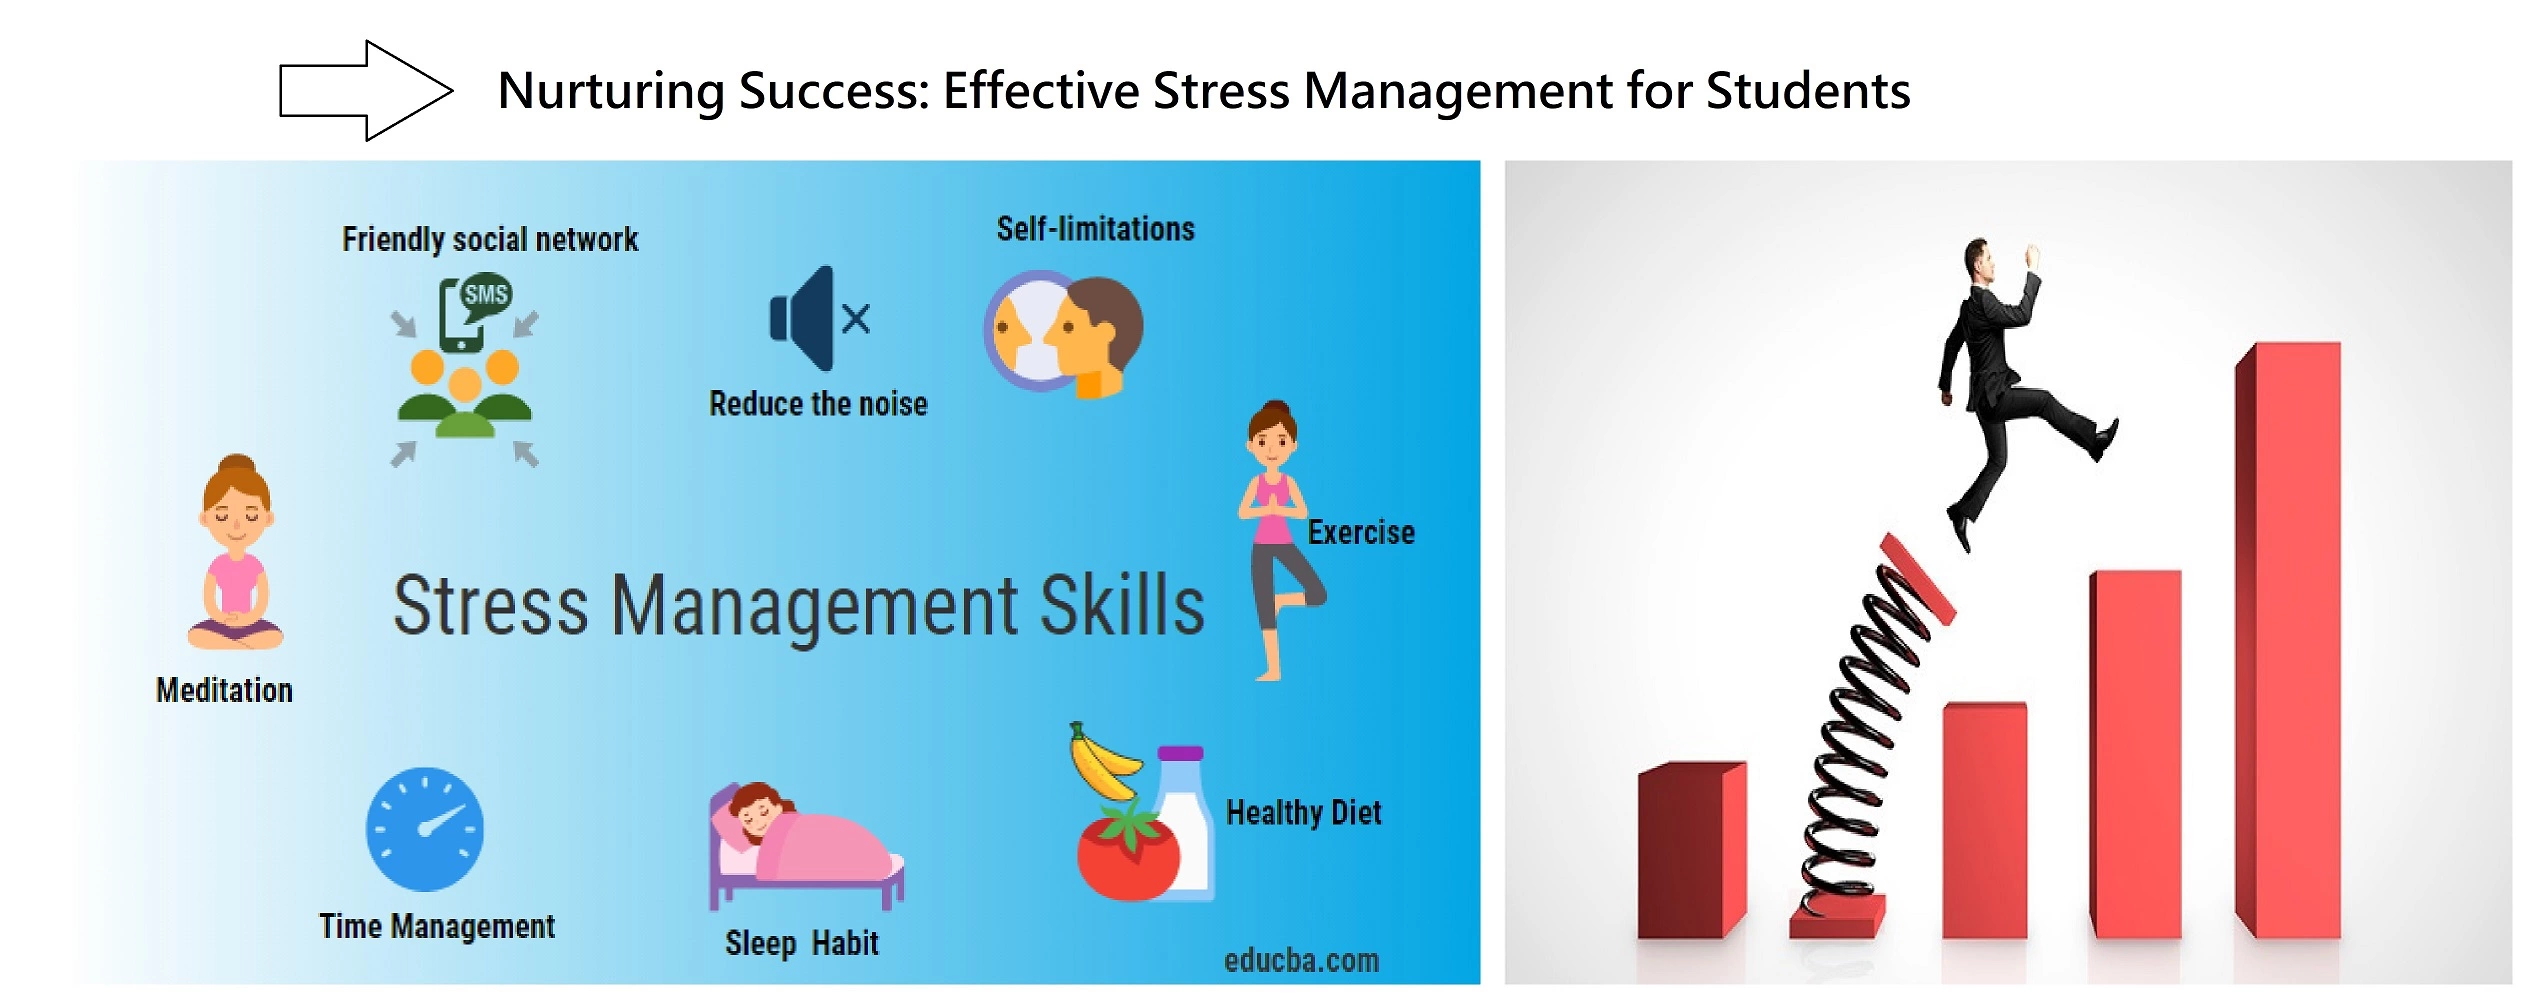 Nurturing Success: Effective Stress Management for Students